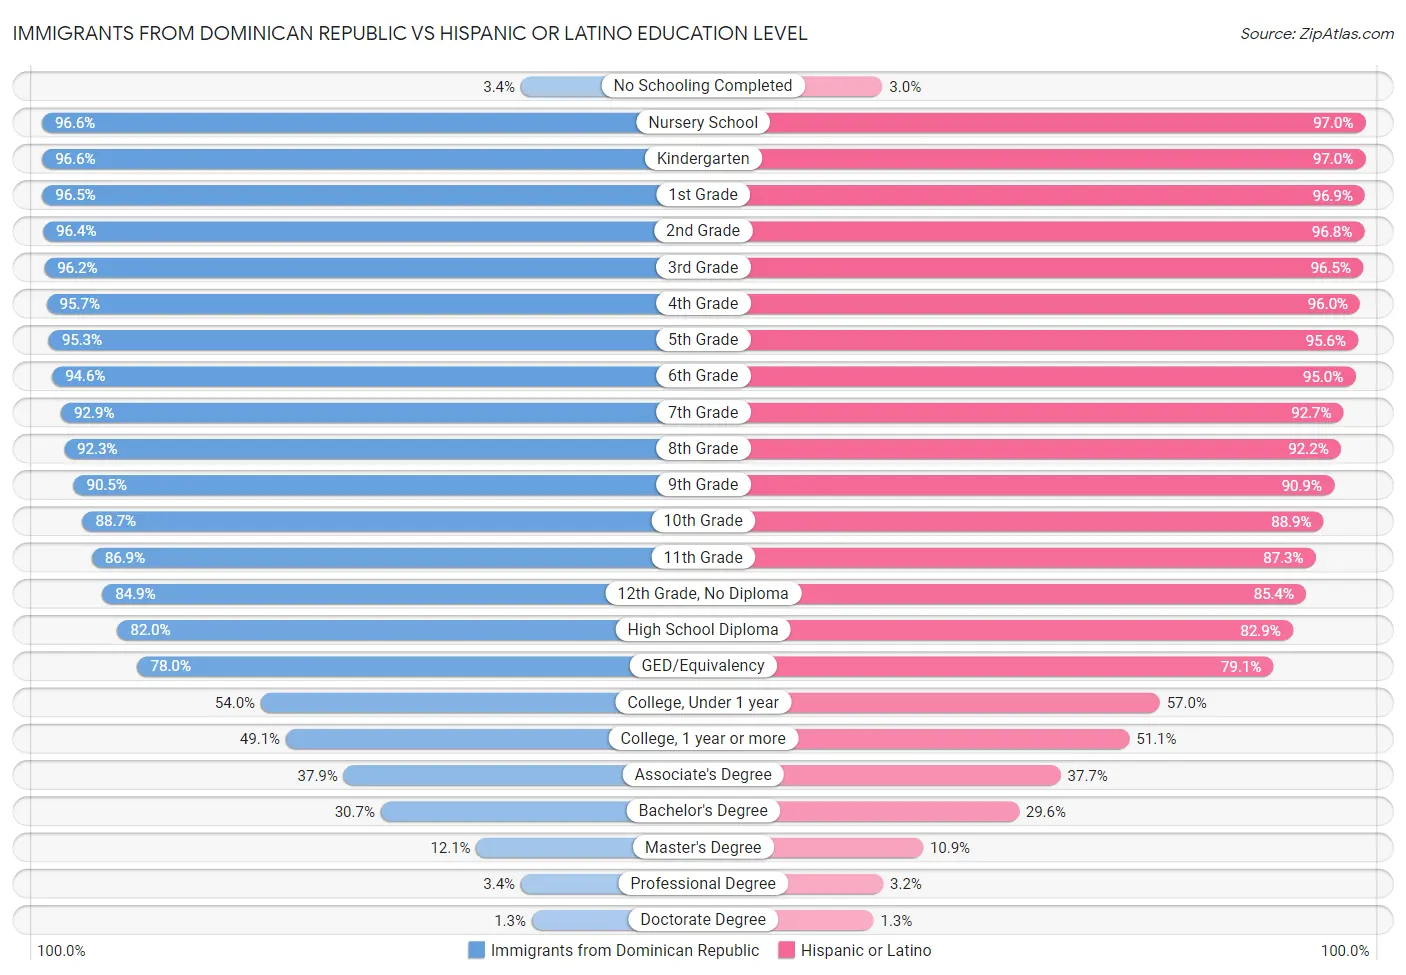 Immigrants from Dominican Republic vs Hispanic or Latino Education Level